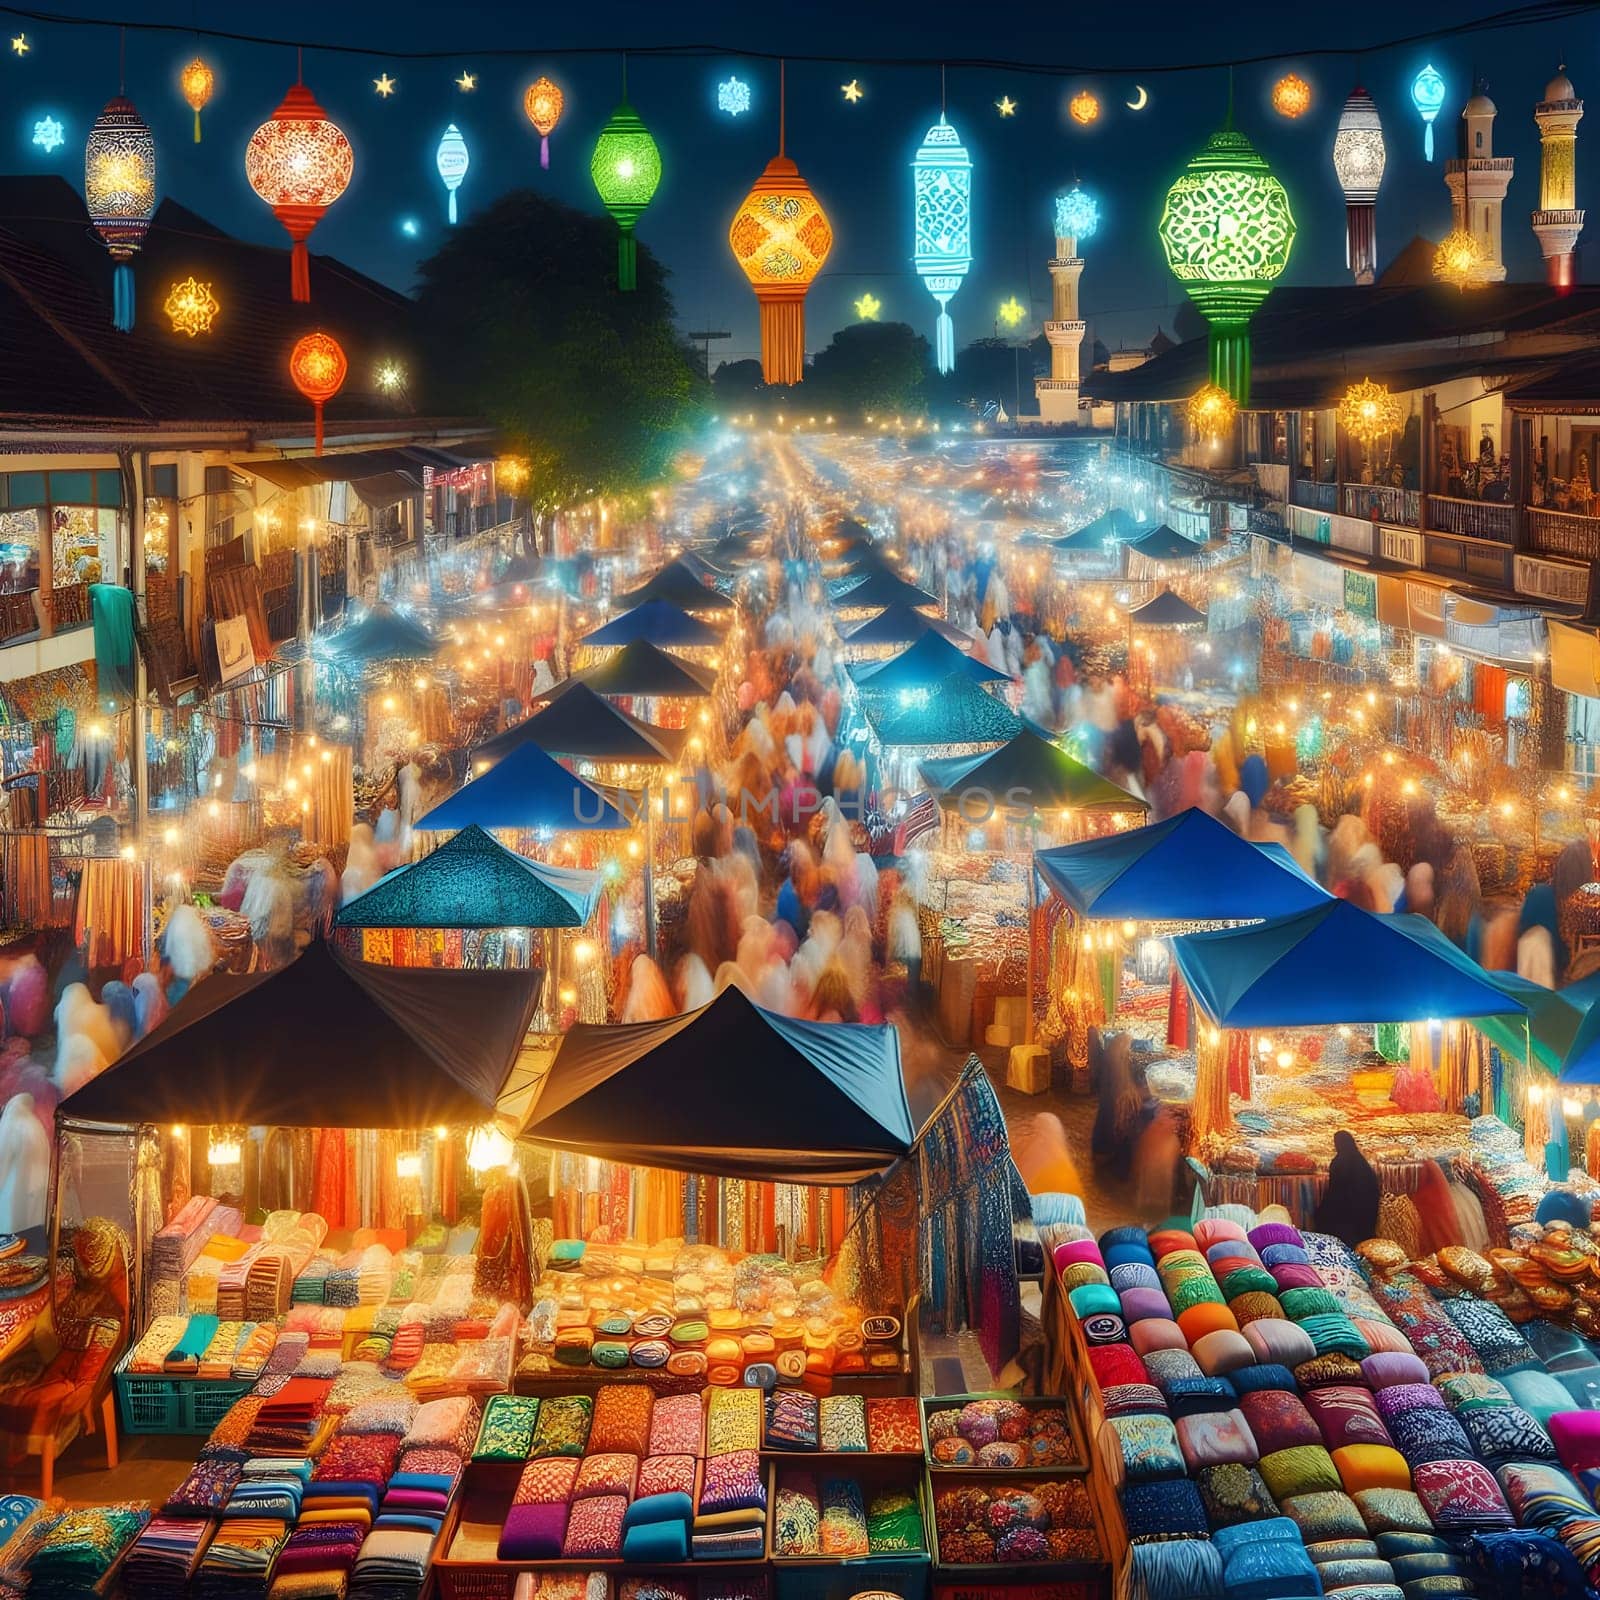 A bustling Ramadan night market scene with vibrant stalls selling colorful fabrics, sweets, and lanterns. Happy ramadan, ramadhan, ramazan by Designlab